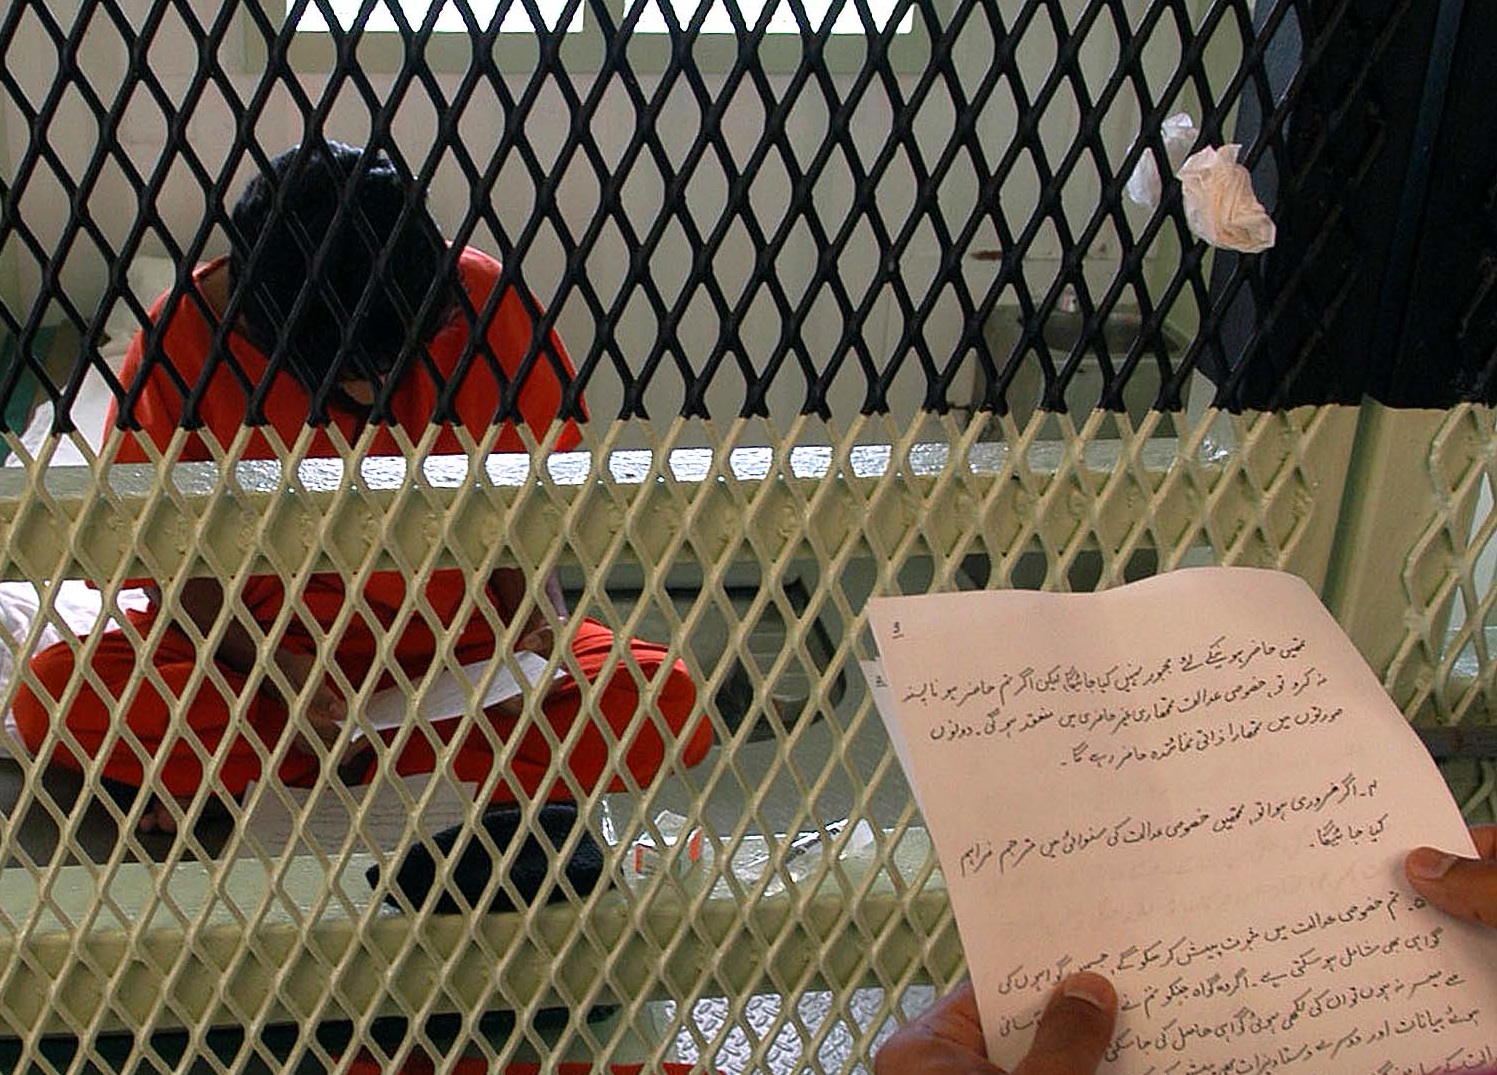 This Week in Guantánamo: 2013 and 2004 Thumbnail Image